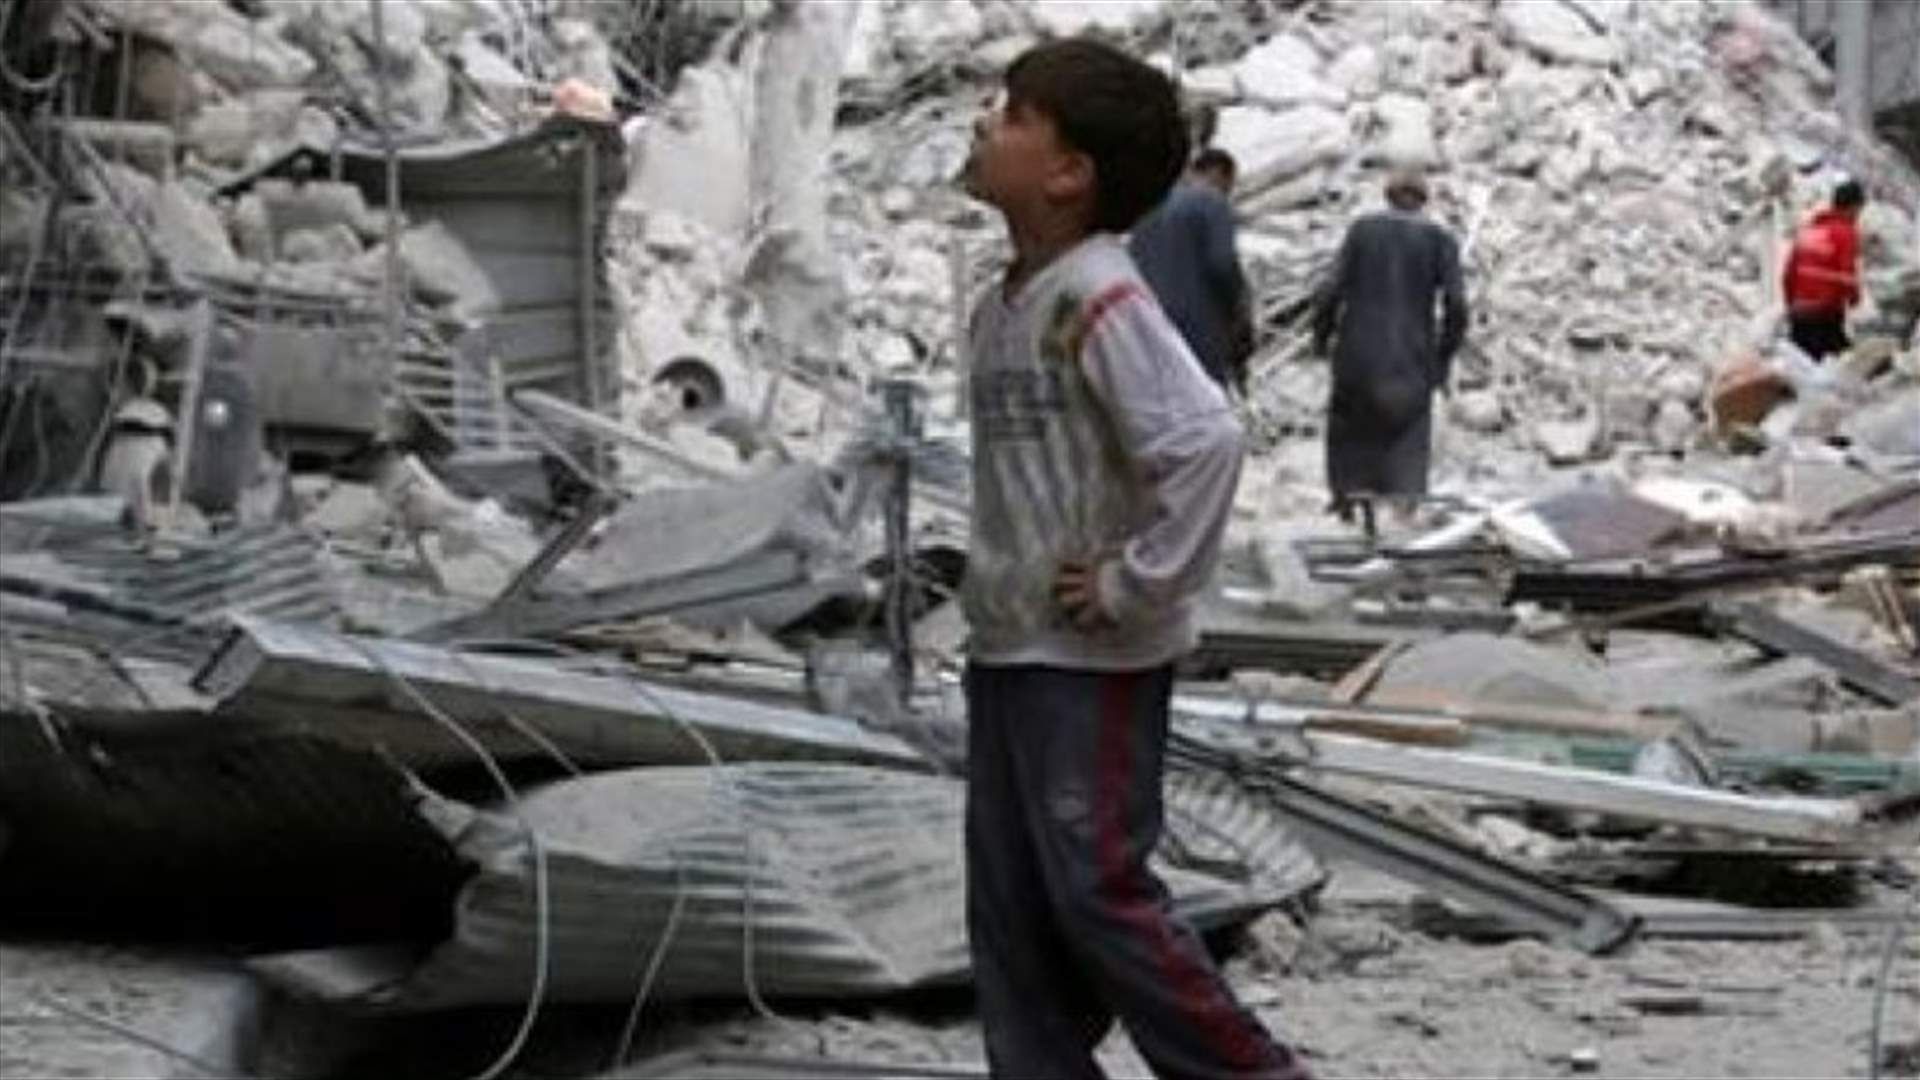 Aleppo siege and air strikes are war crimes -UN rights boss